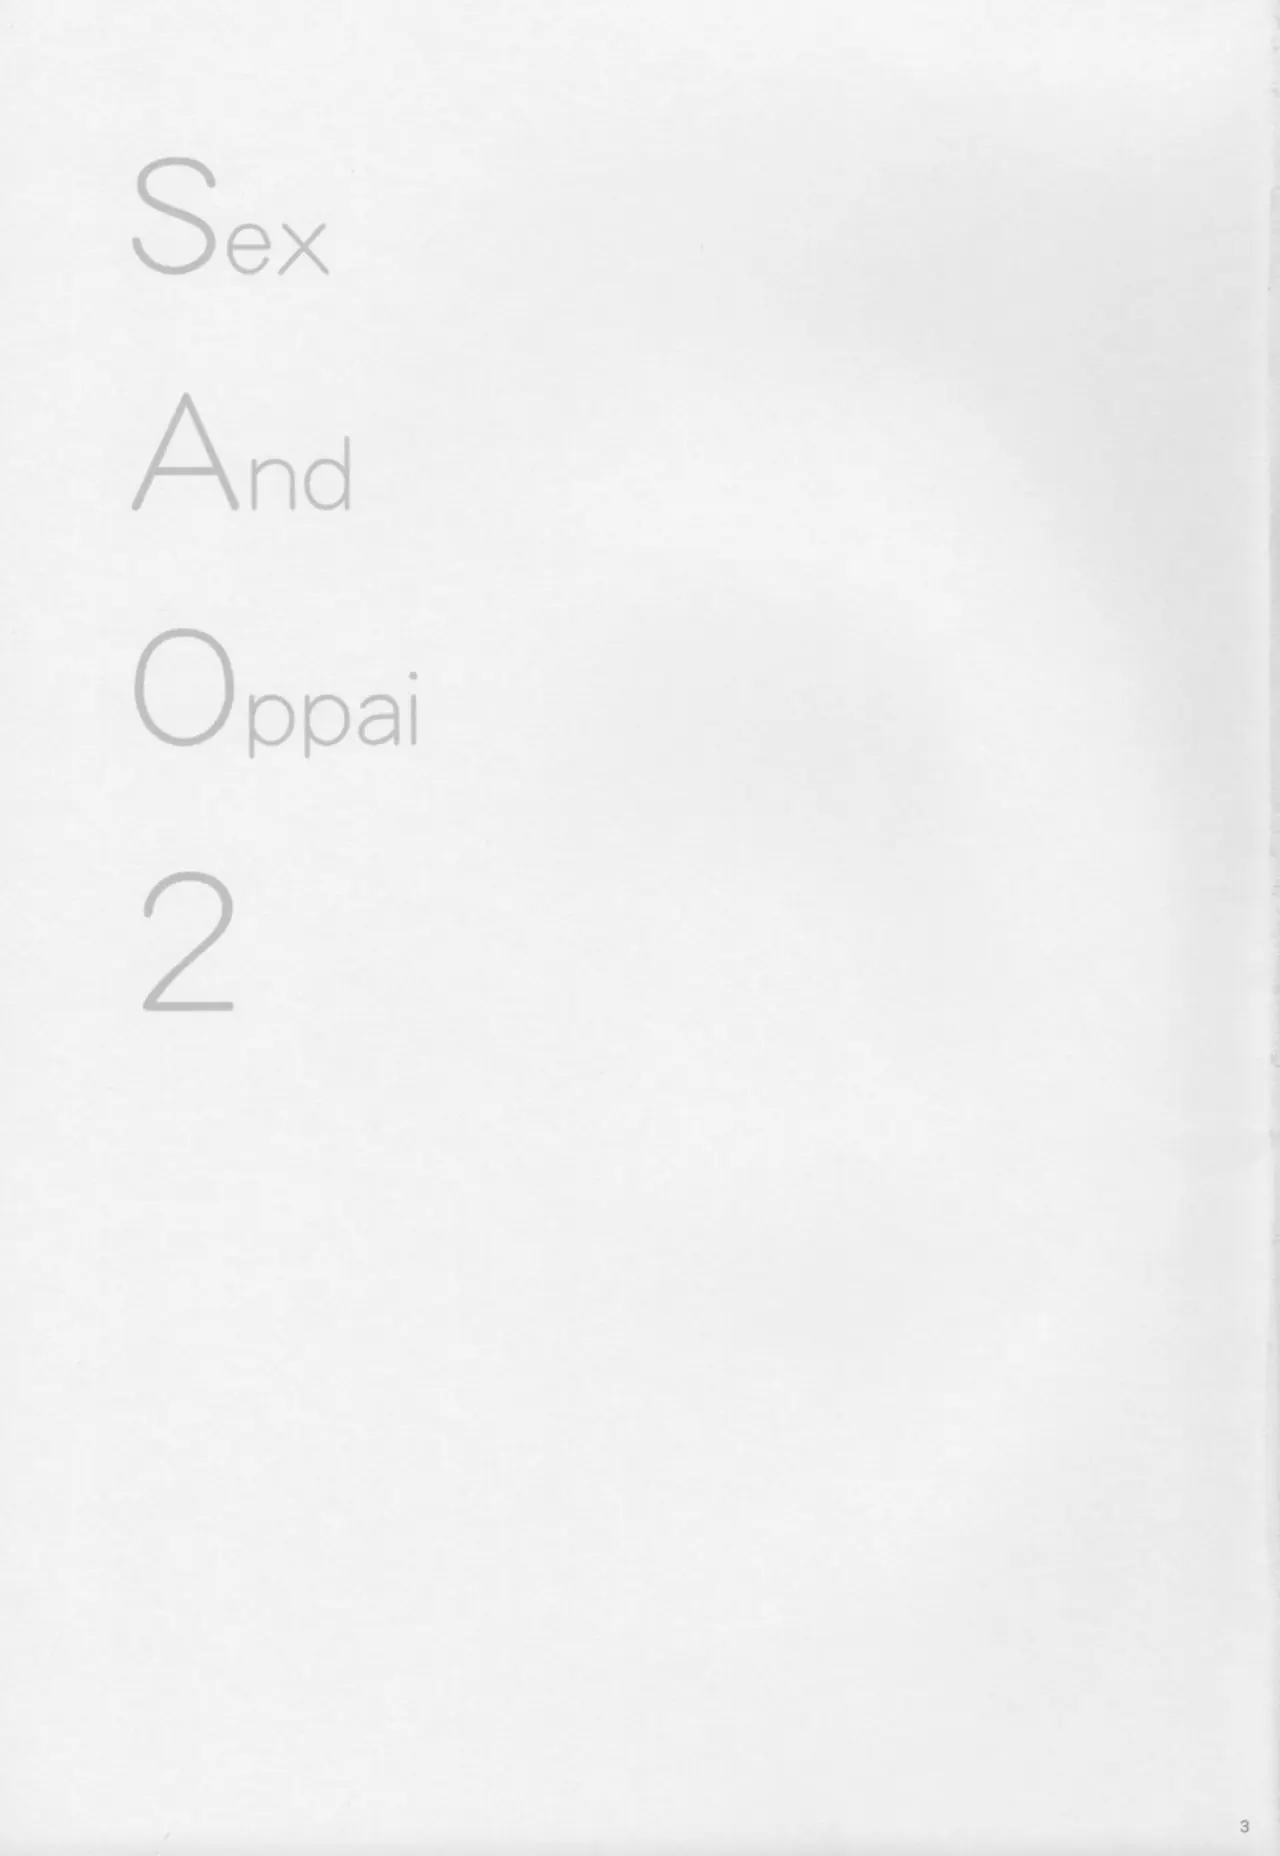 Sex And Oppai 2 ソードアートオンライン-2